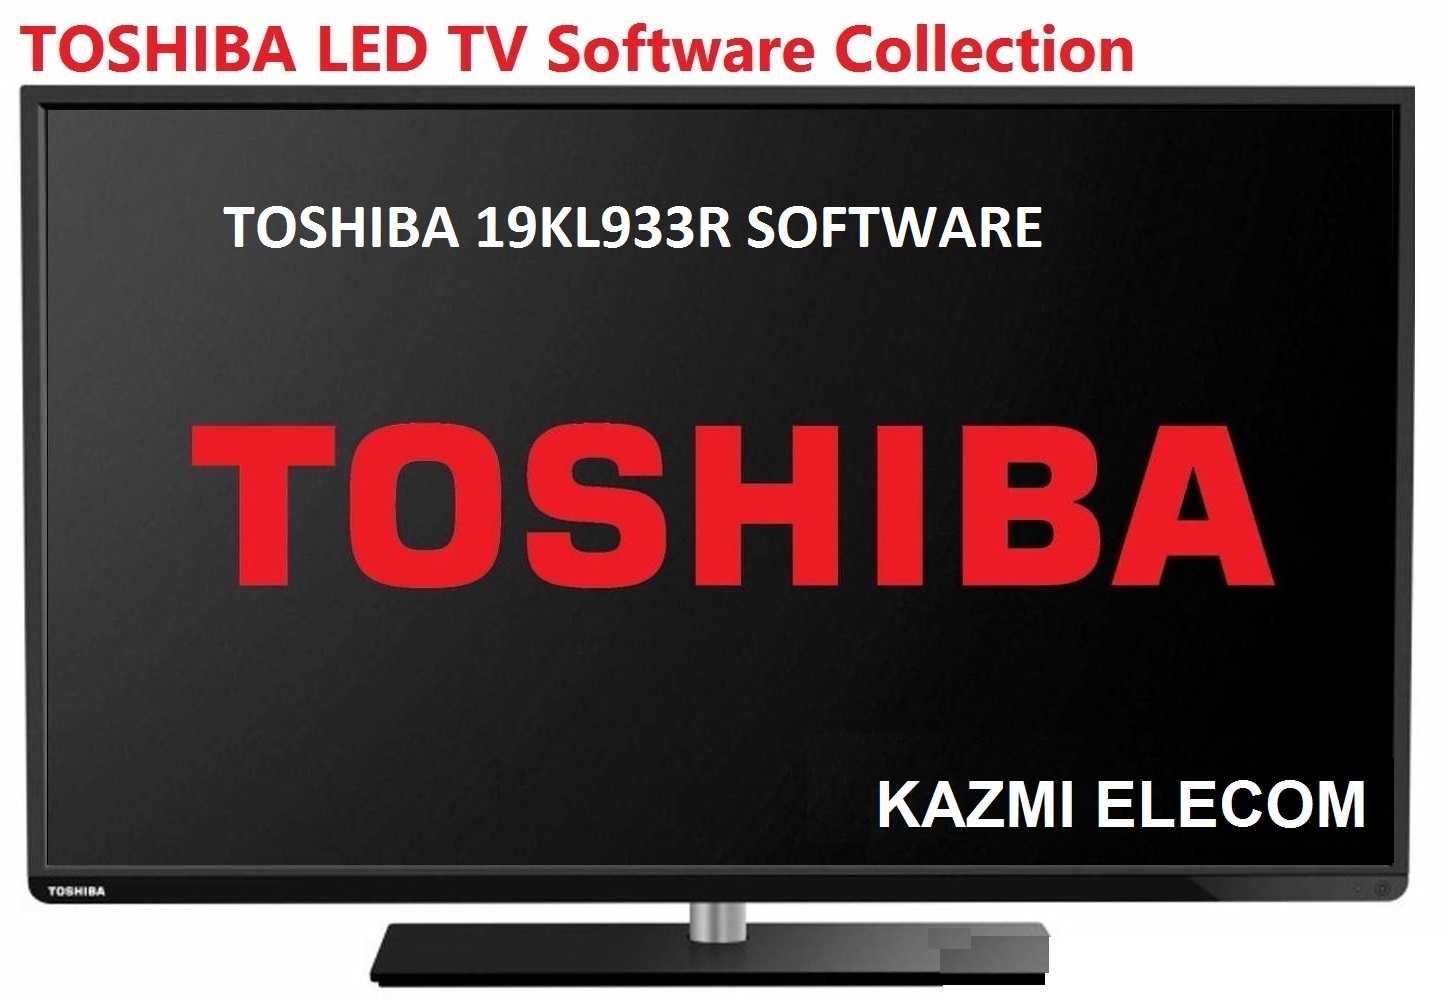 Toshiba 19Kl933R